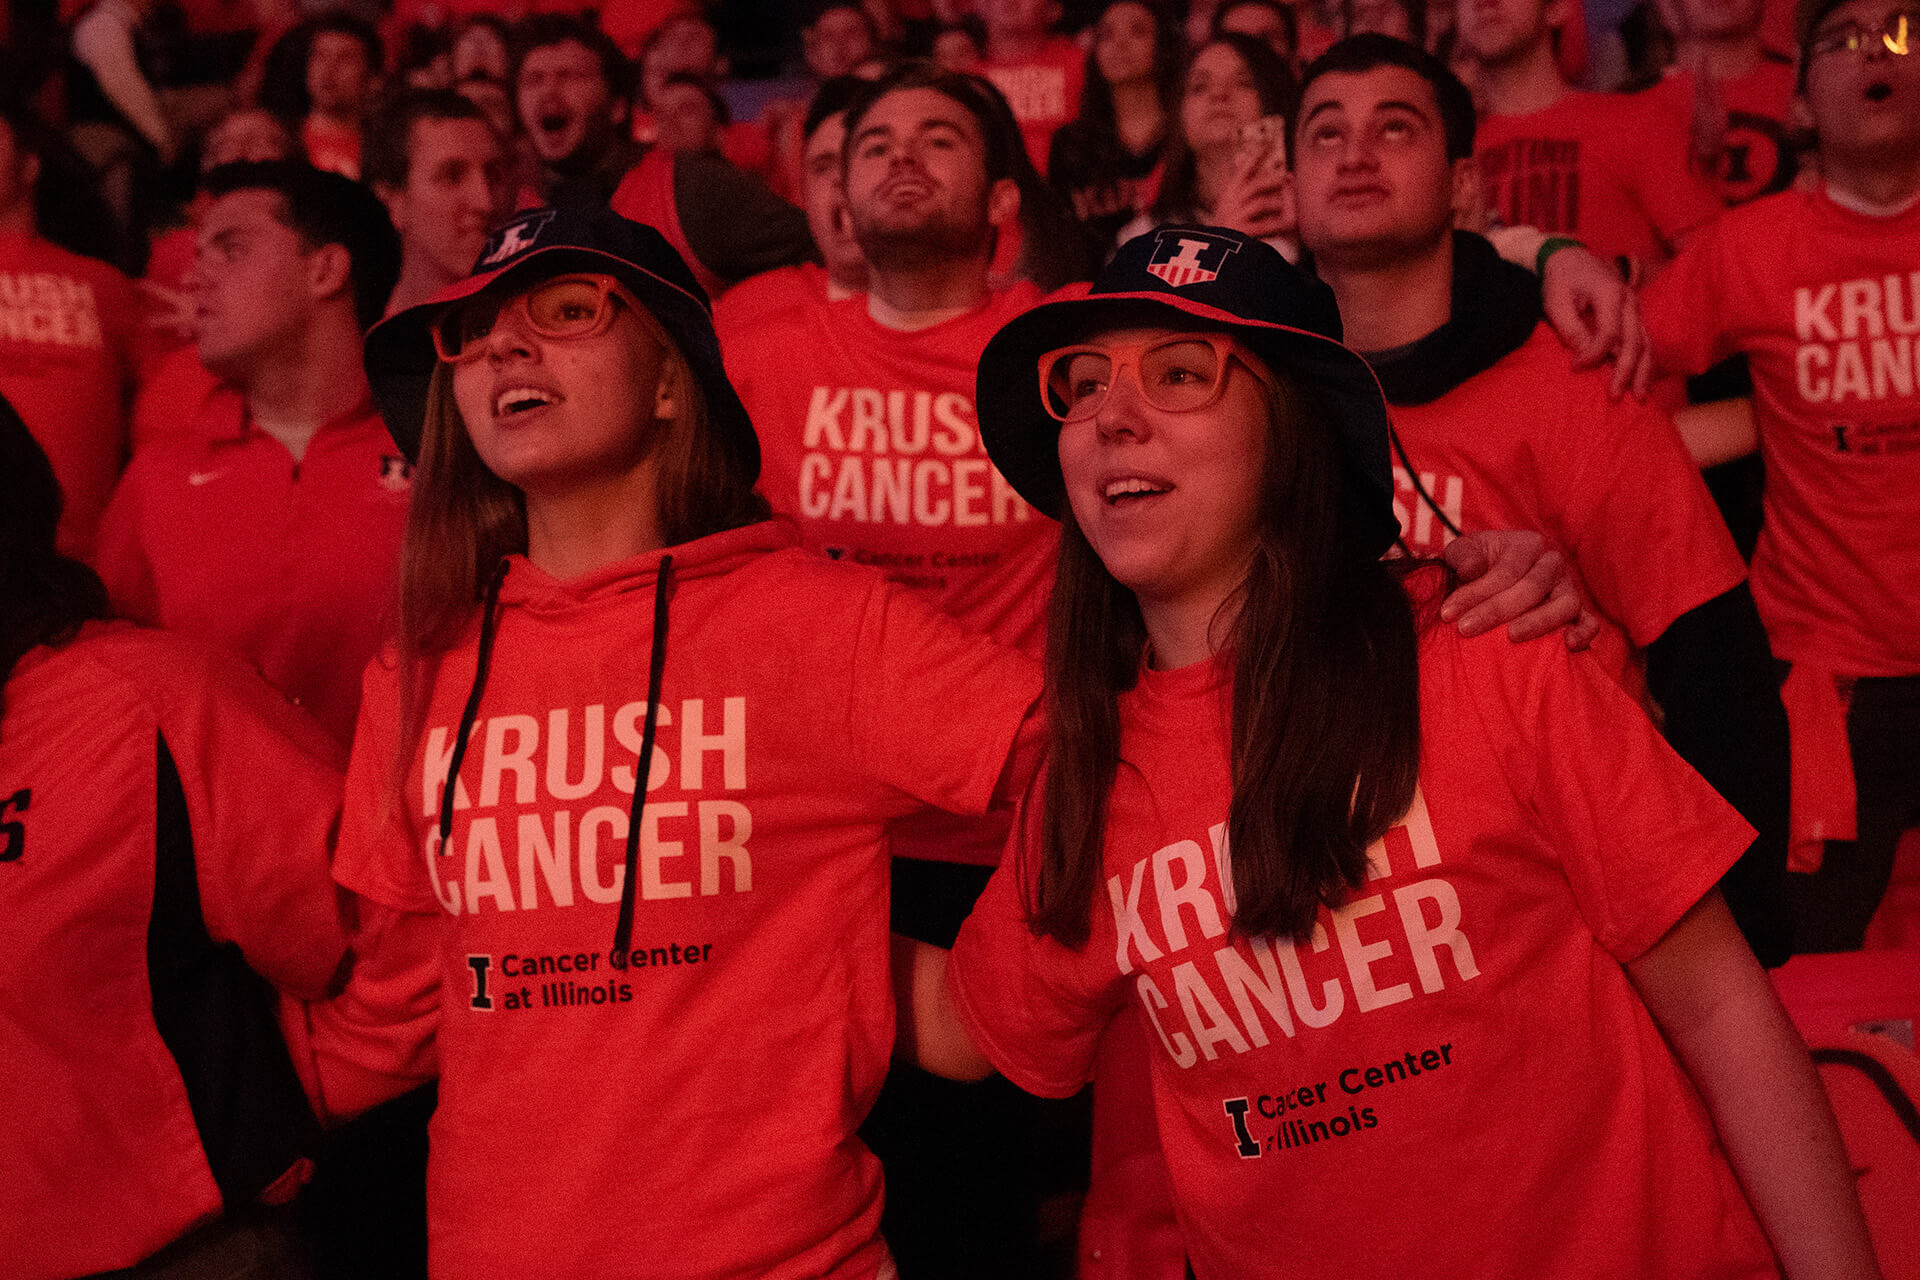 Krush Cancer - Students Wearing Shirts and Cheering